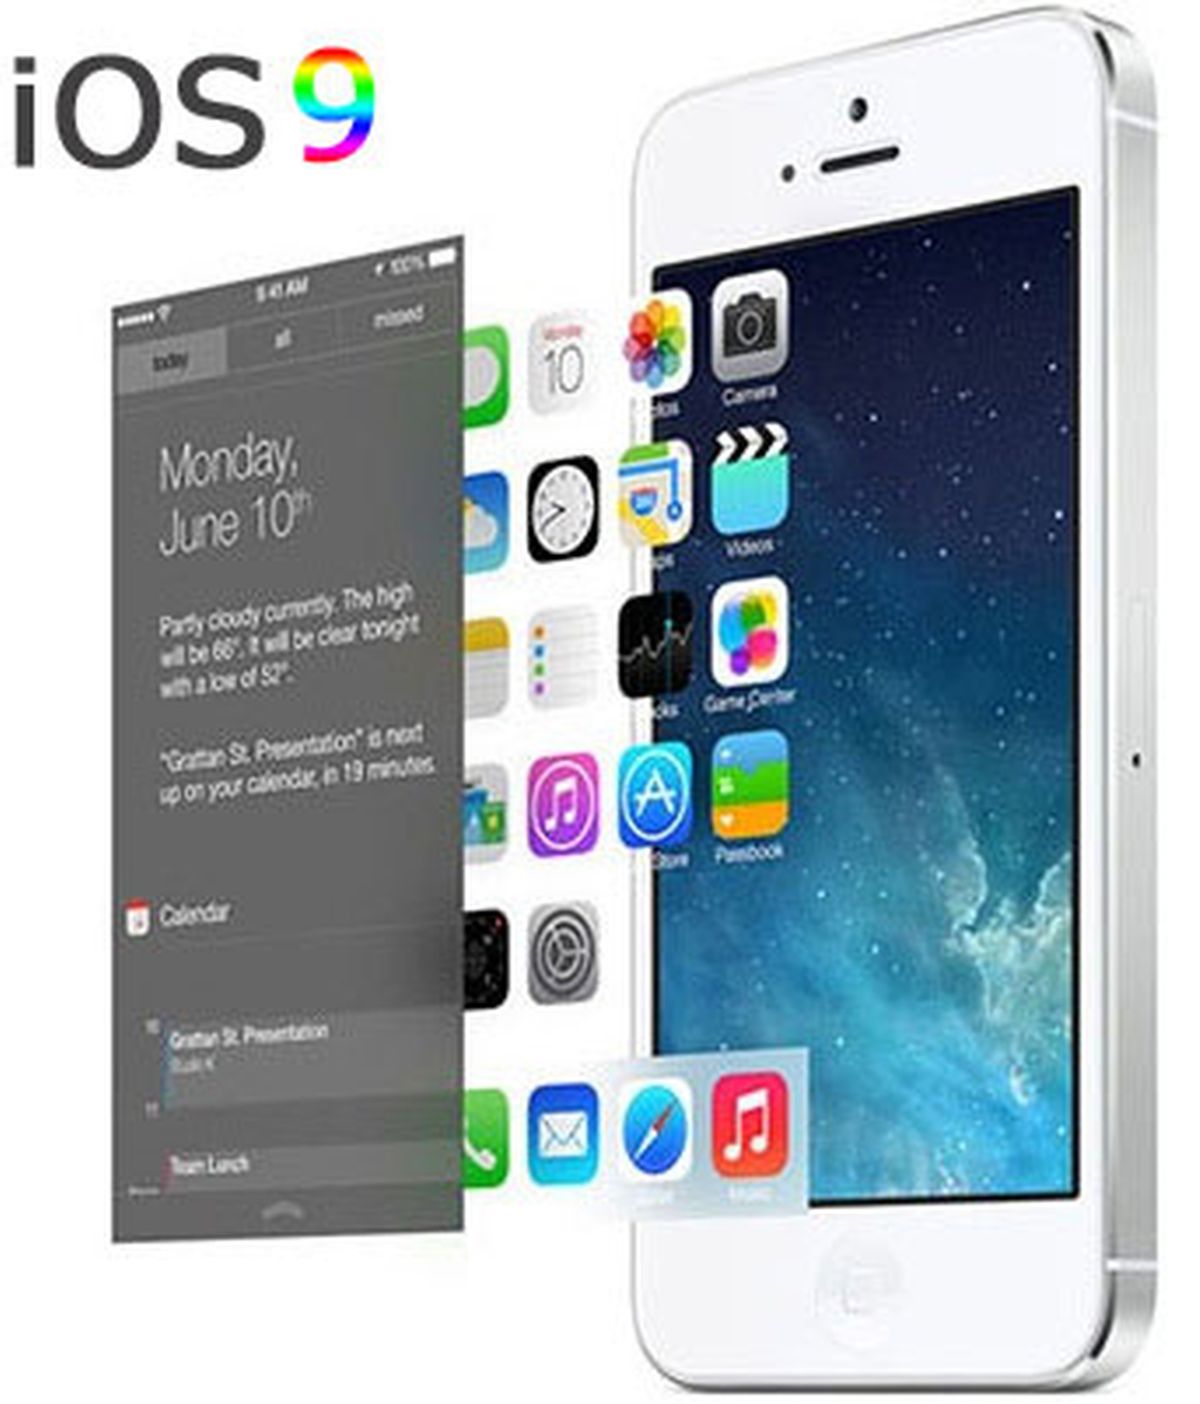 sistema operativo iOS 9,iOS 9